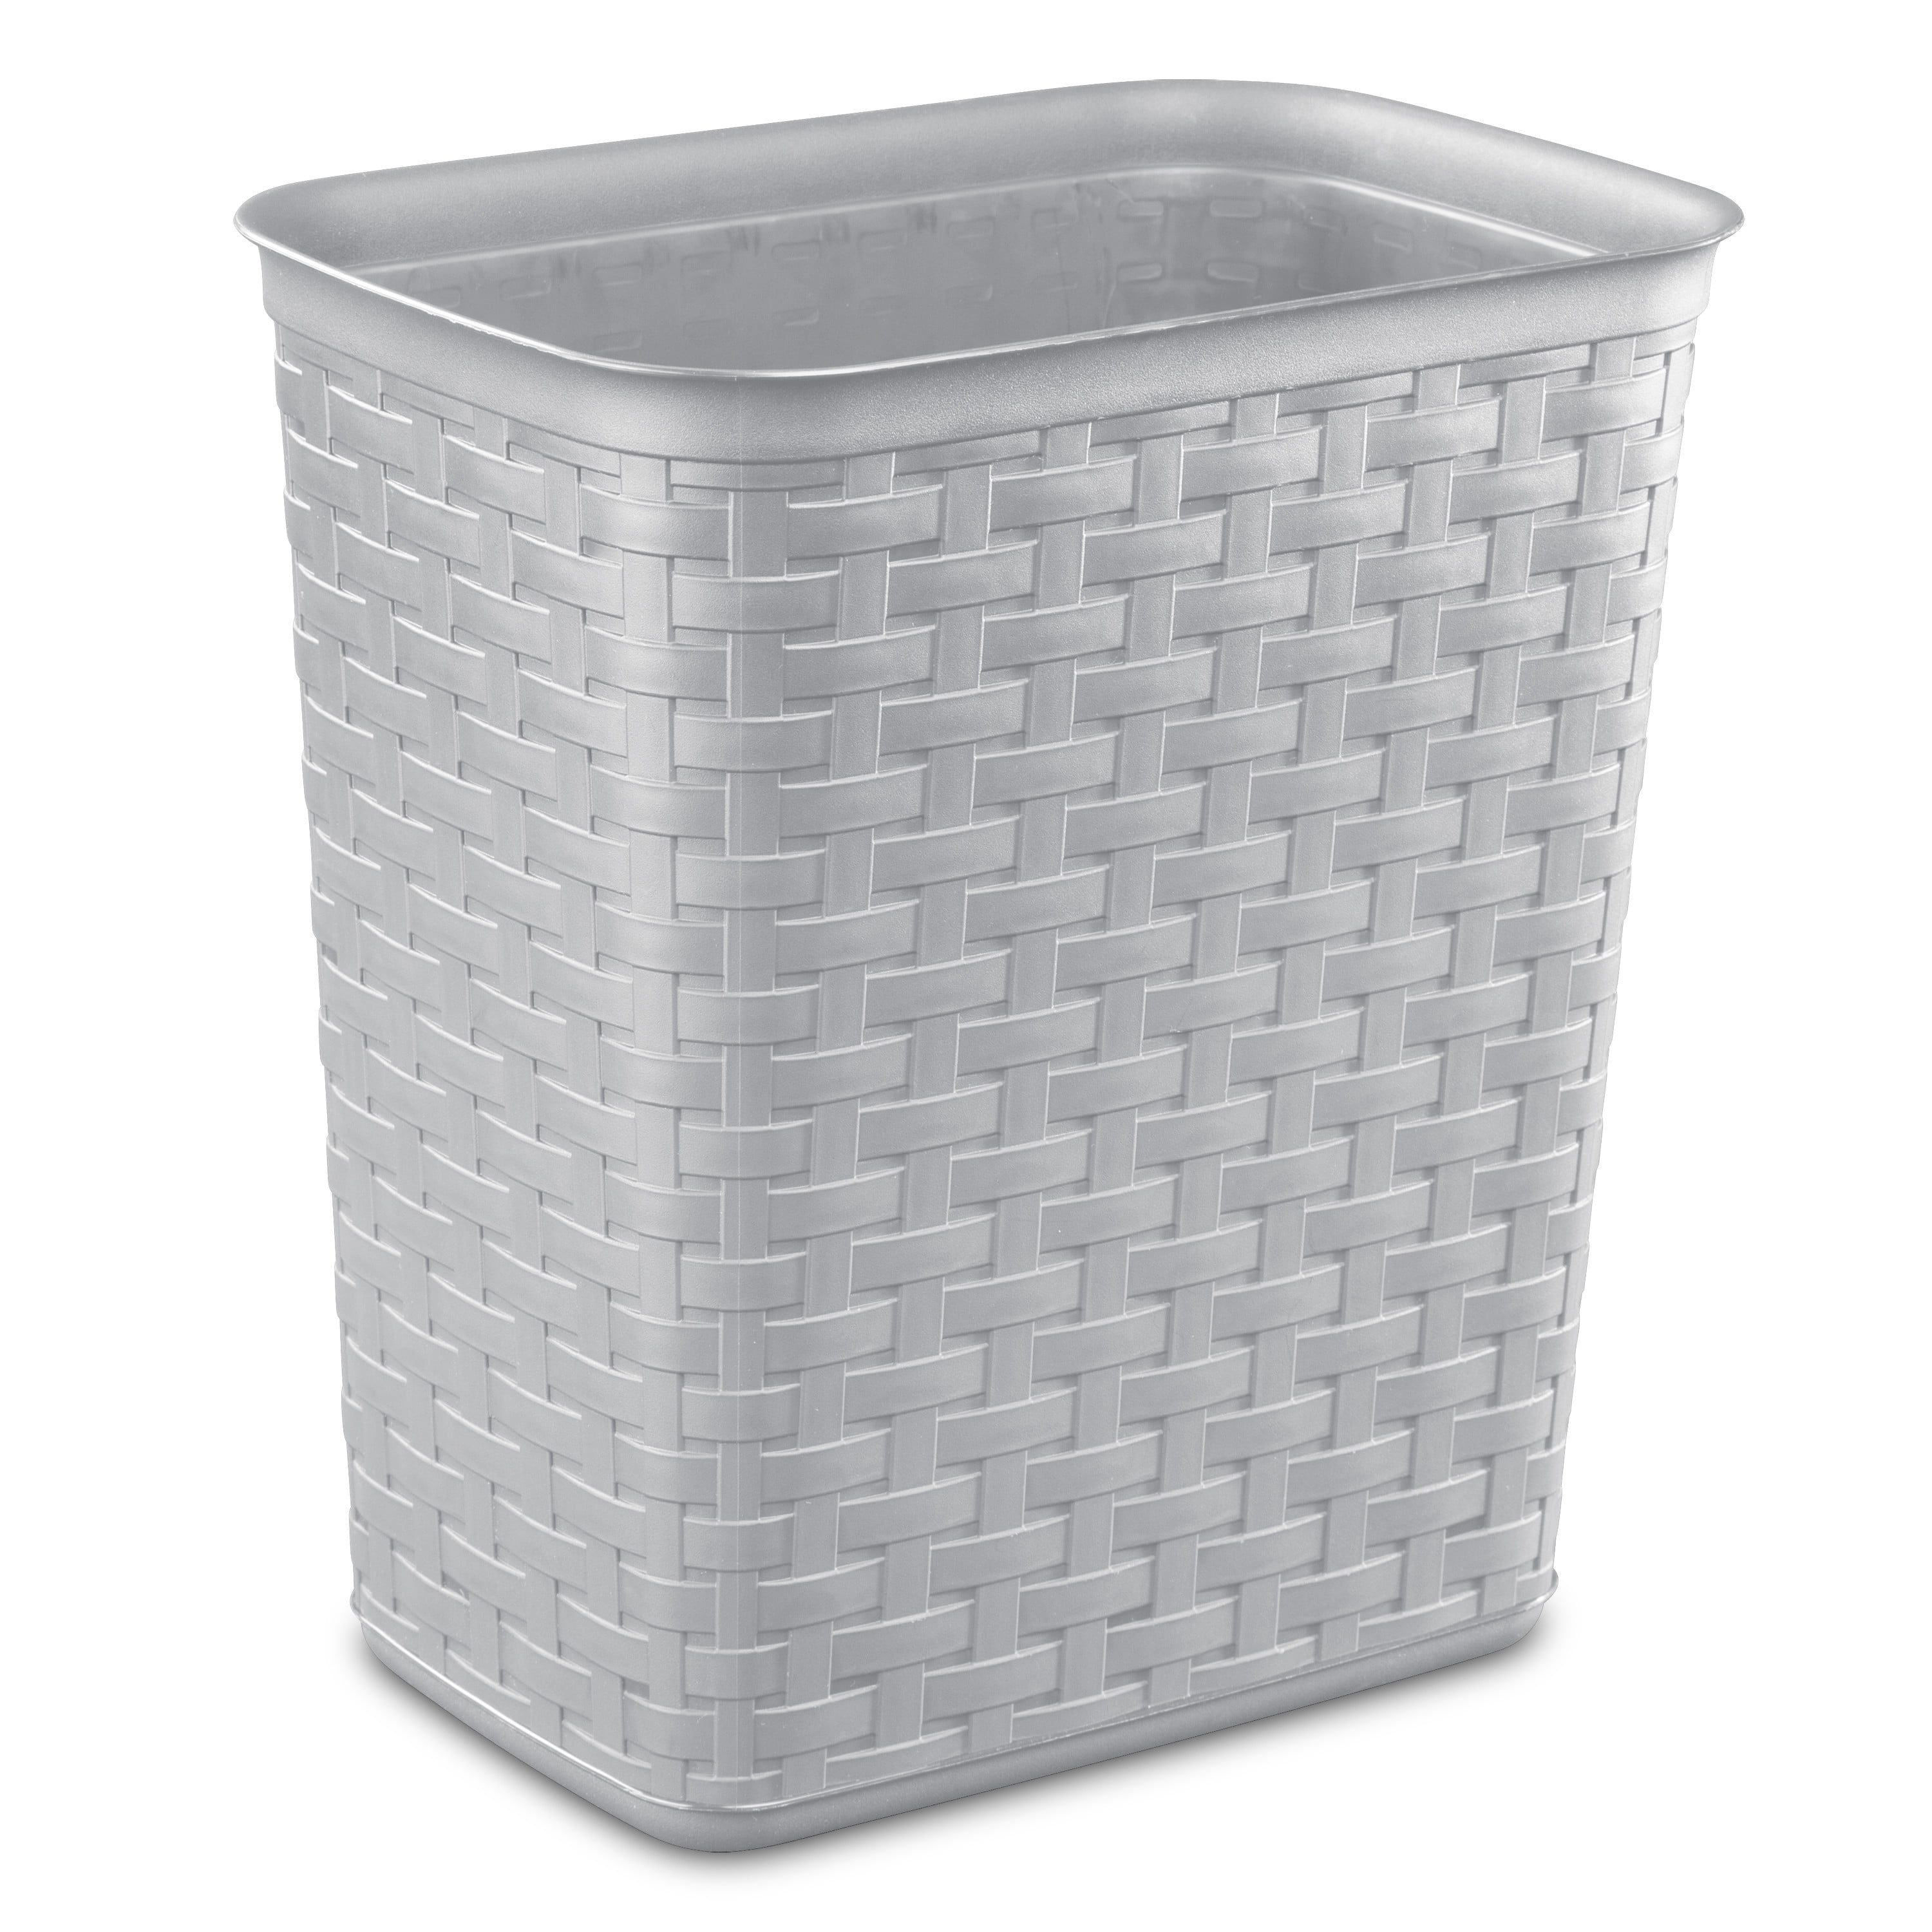 Sterilite 3.4 Gallon Trash Can, Plastic Weave Bathroom Trash Can, Grey